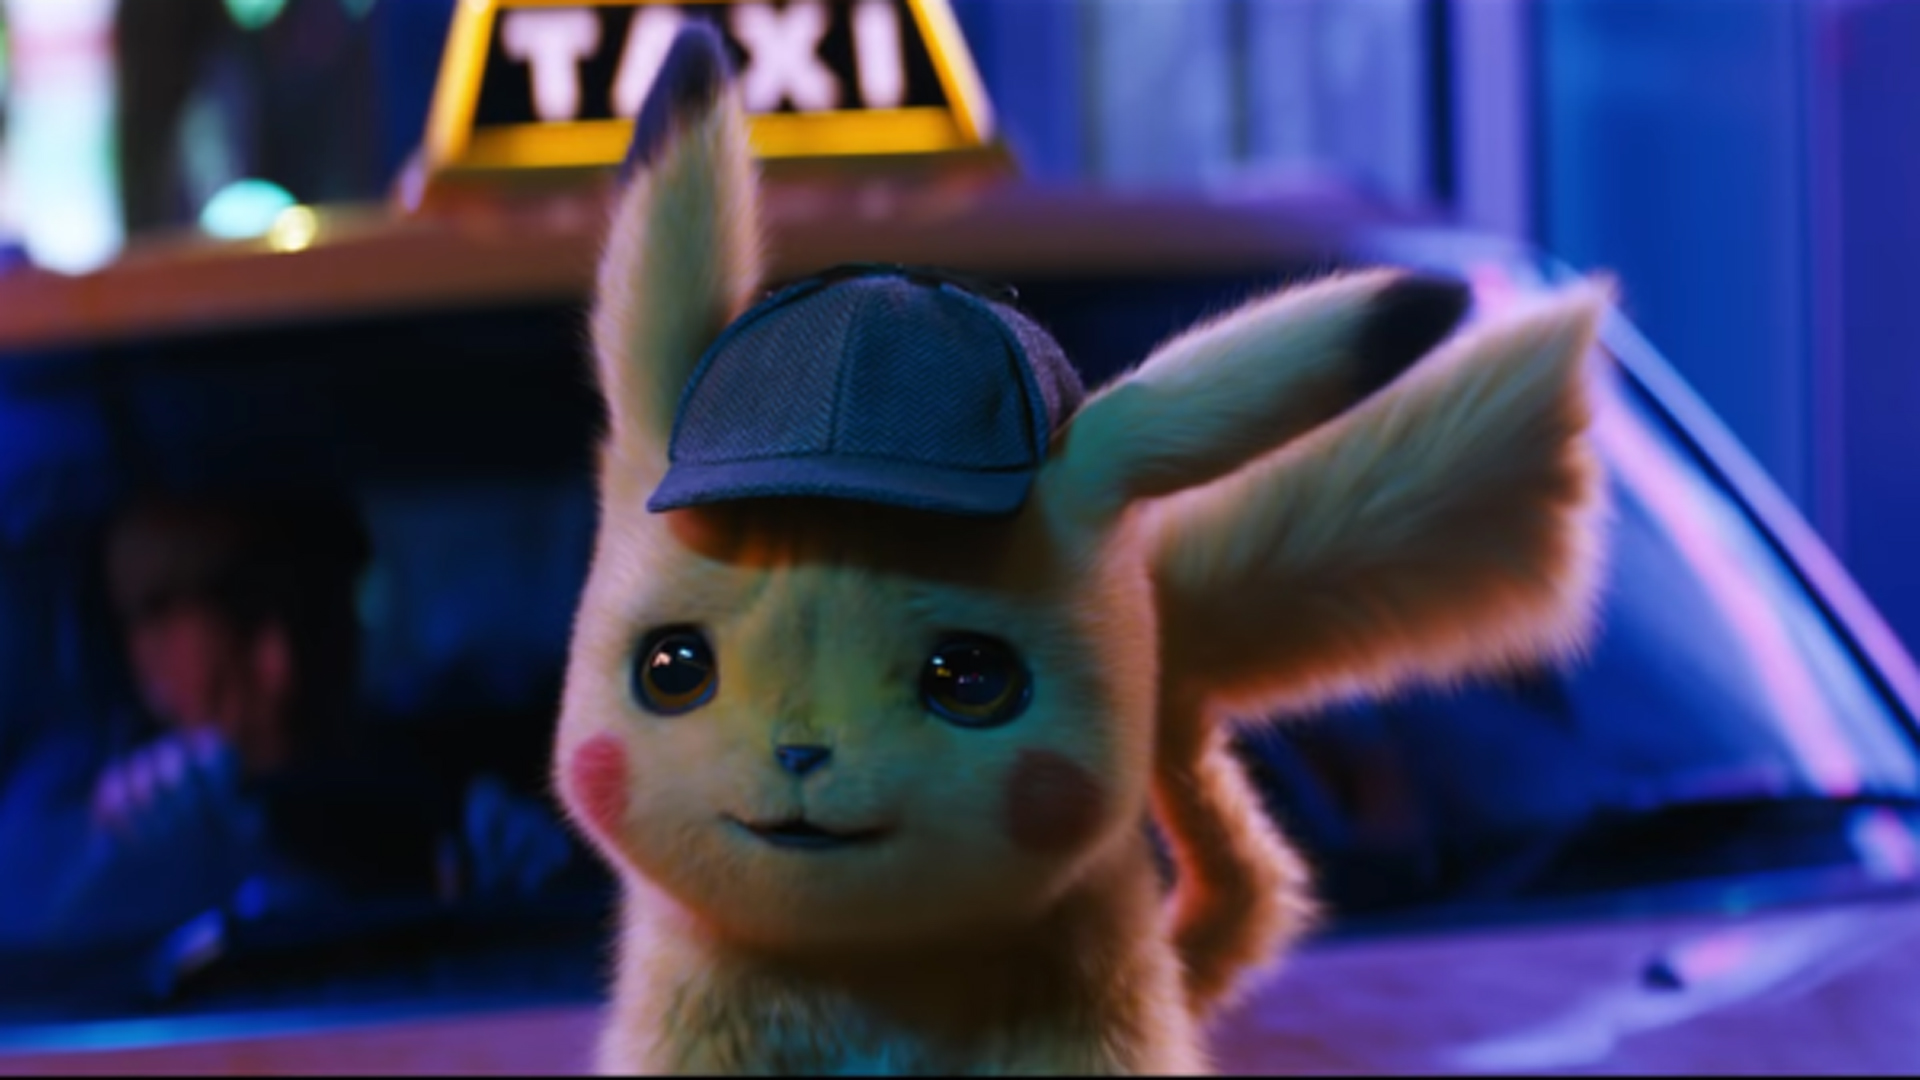 Ryan Reynolds Pikachu